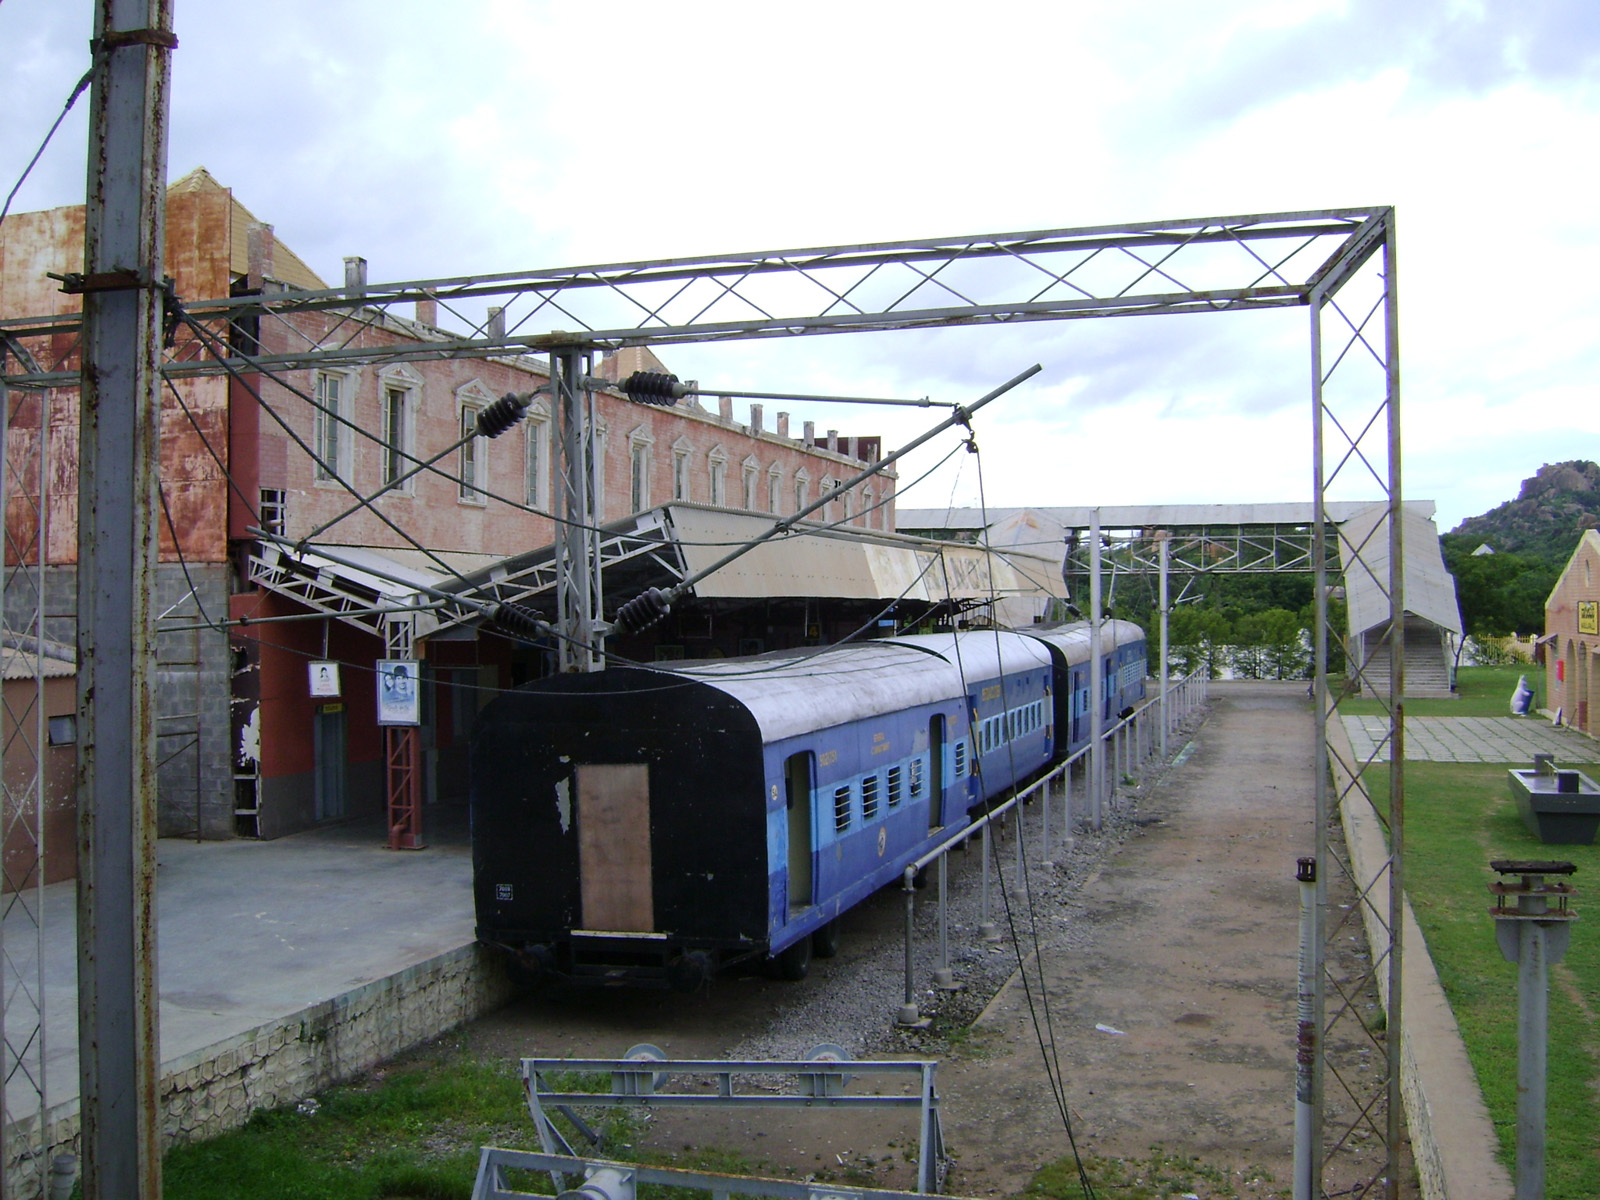 Rail way station, Railway, Station, Train, HQ Photo